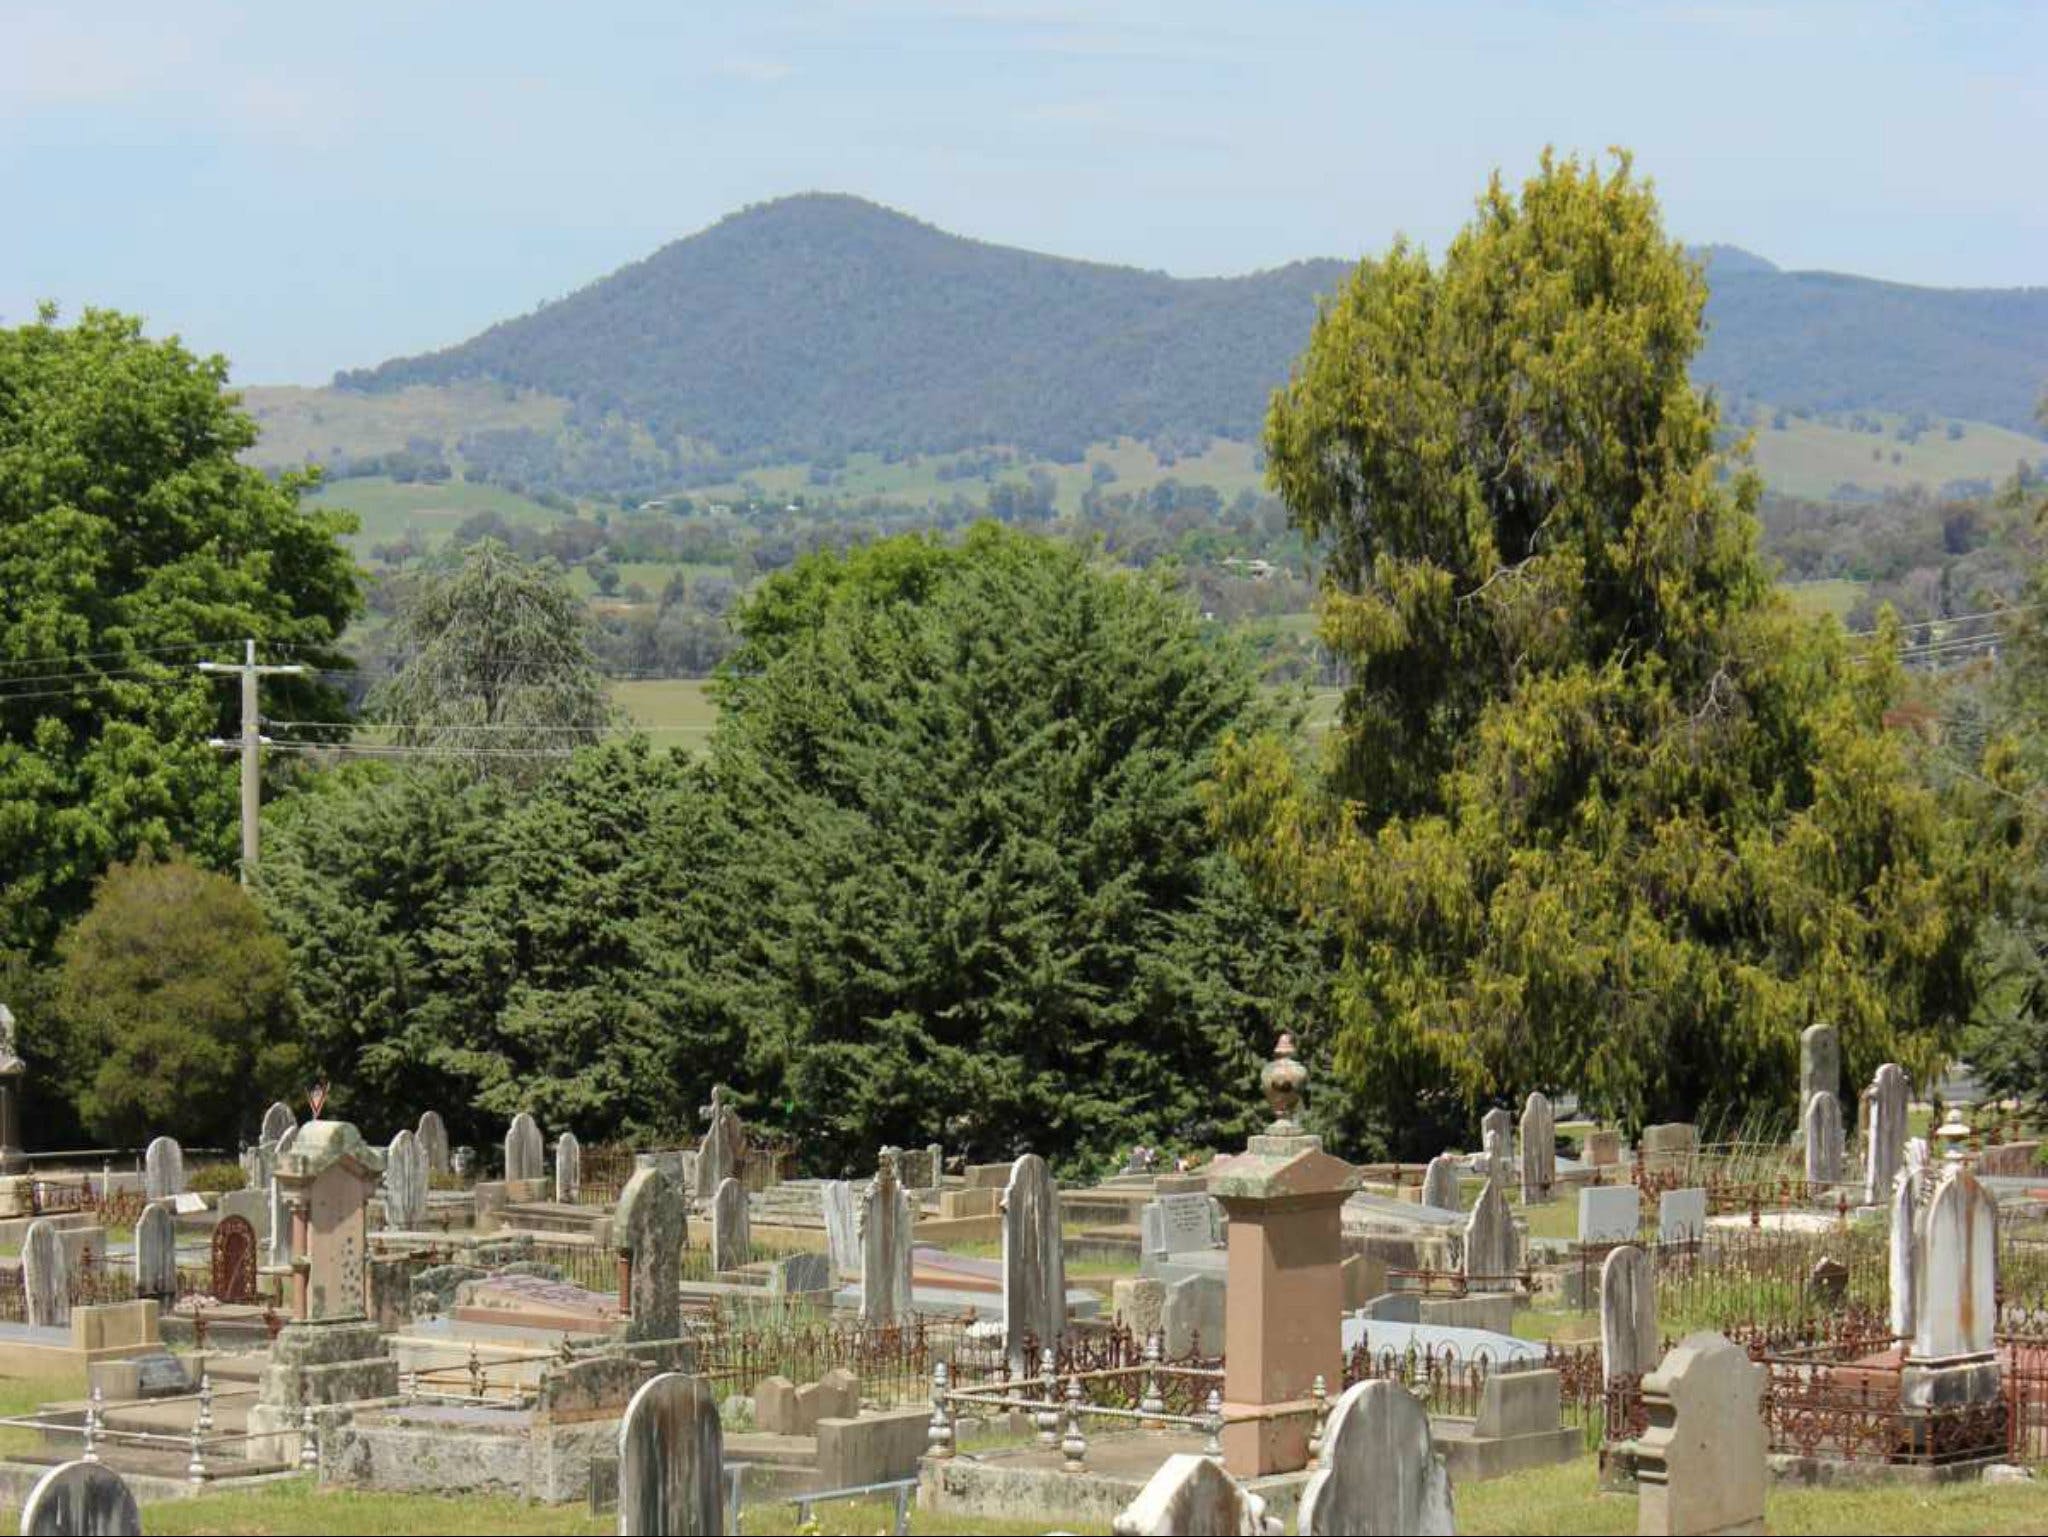 Yackandandah Cemetery - Find Attractions